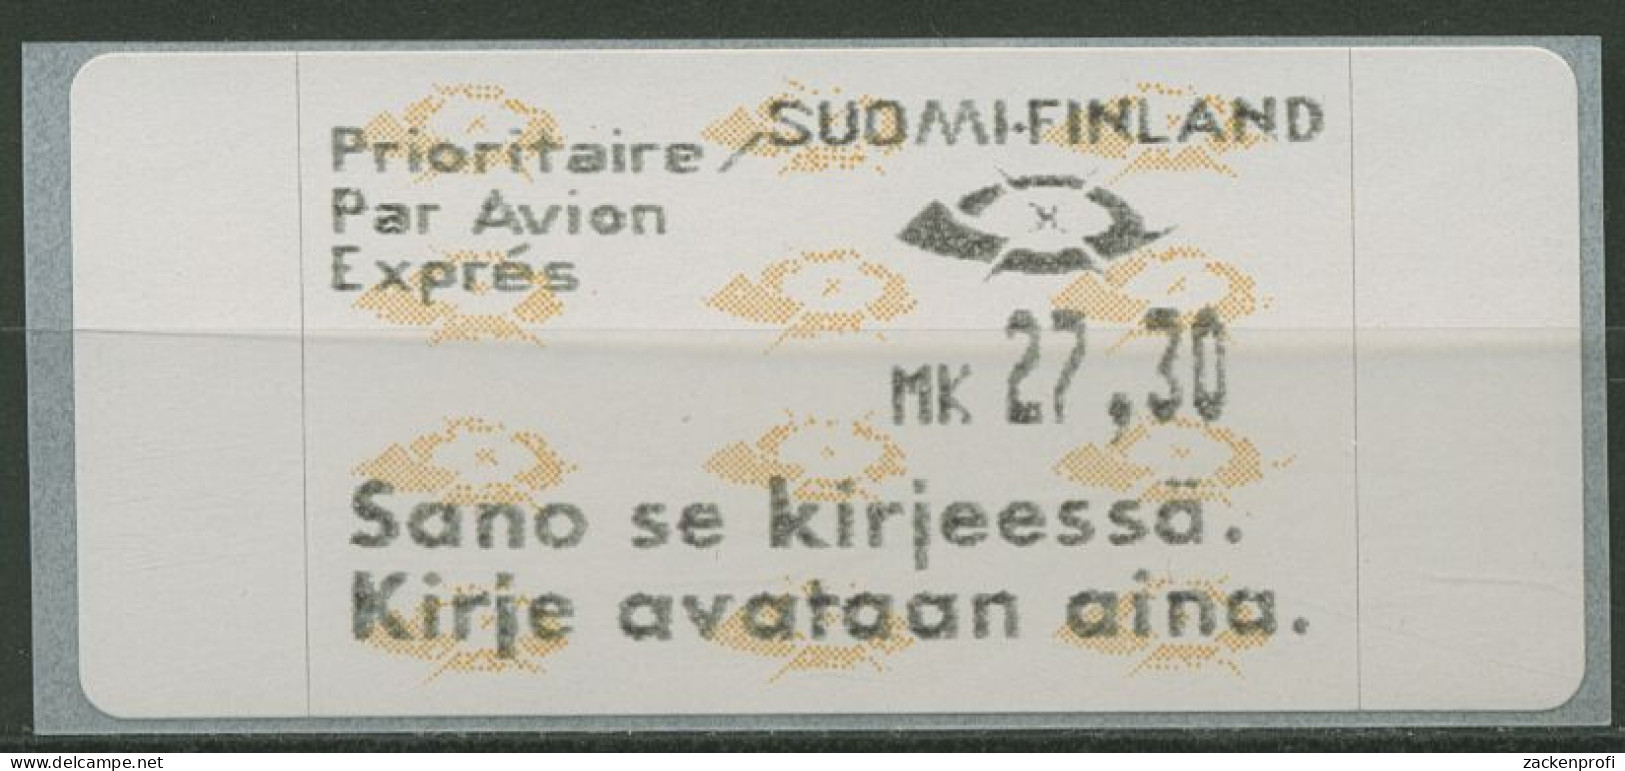 Finnland ATM 1993 Posthörner Einzelwert ATM 12.6 Z7 Postfrisch - Viñetas De Franqueo [ATM]